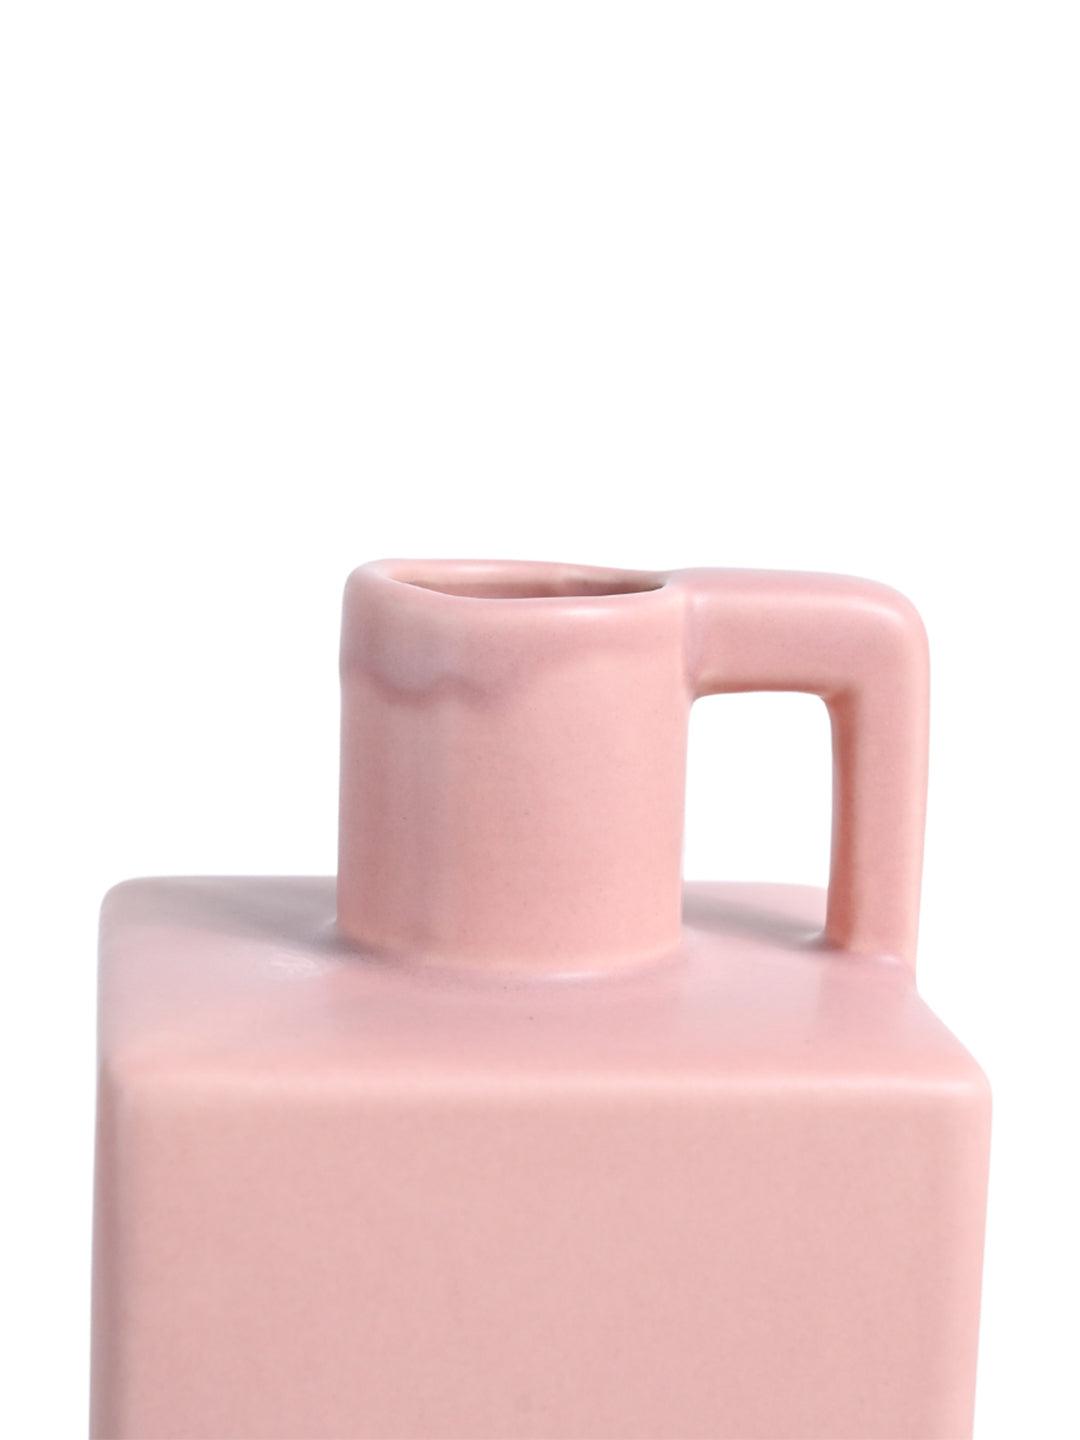 VON CASA Ceramic Peach Vase - MARKET99